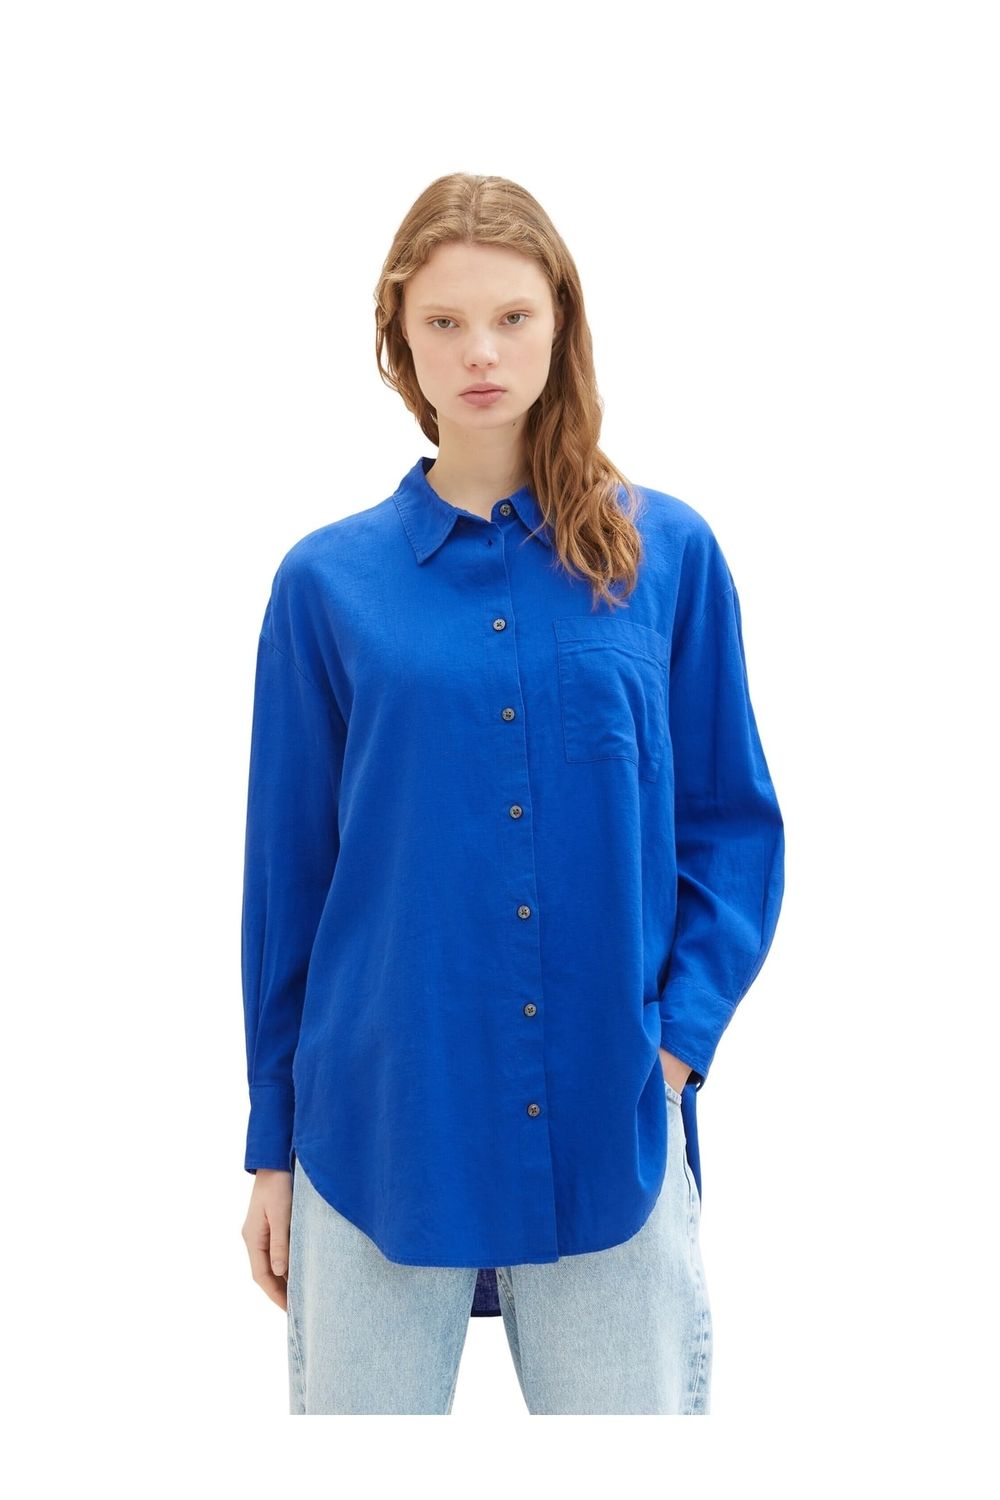 Tom Tailor Denim - Relaxed Trendyol Fit - Blau Bluse 